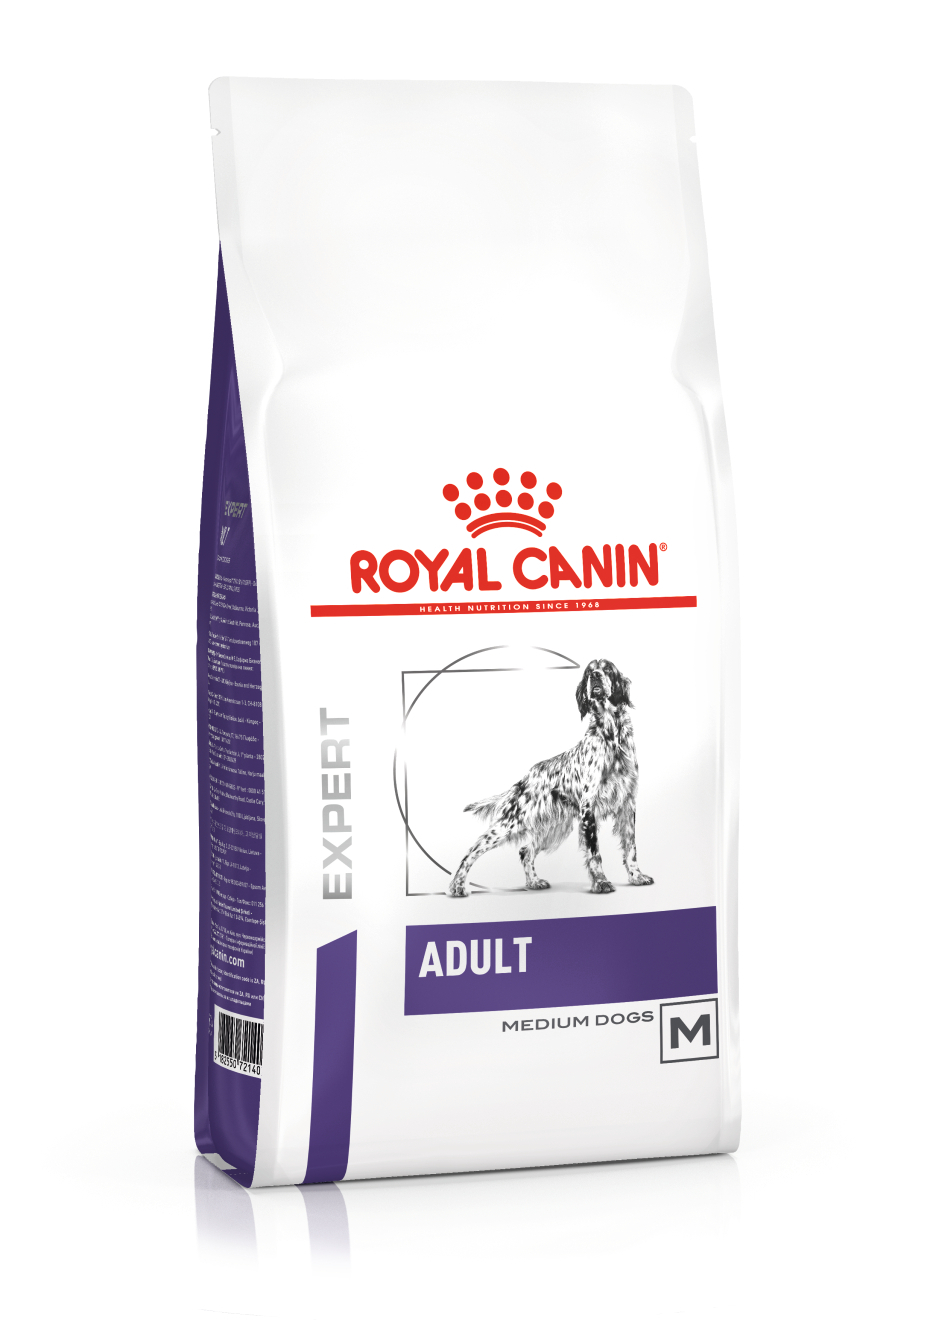 ROYAL CANIN Expert Adult Medium para perros de tamaño mediano